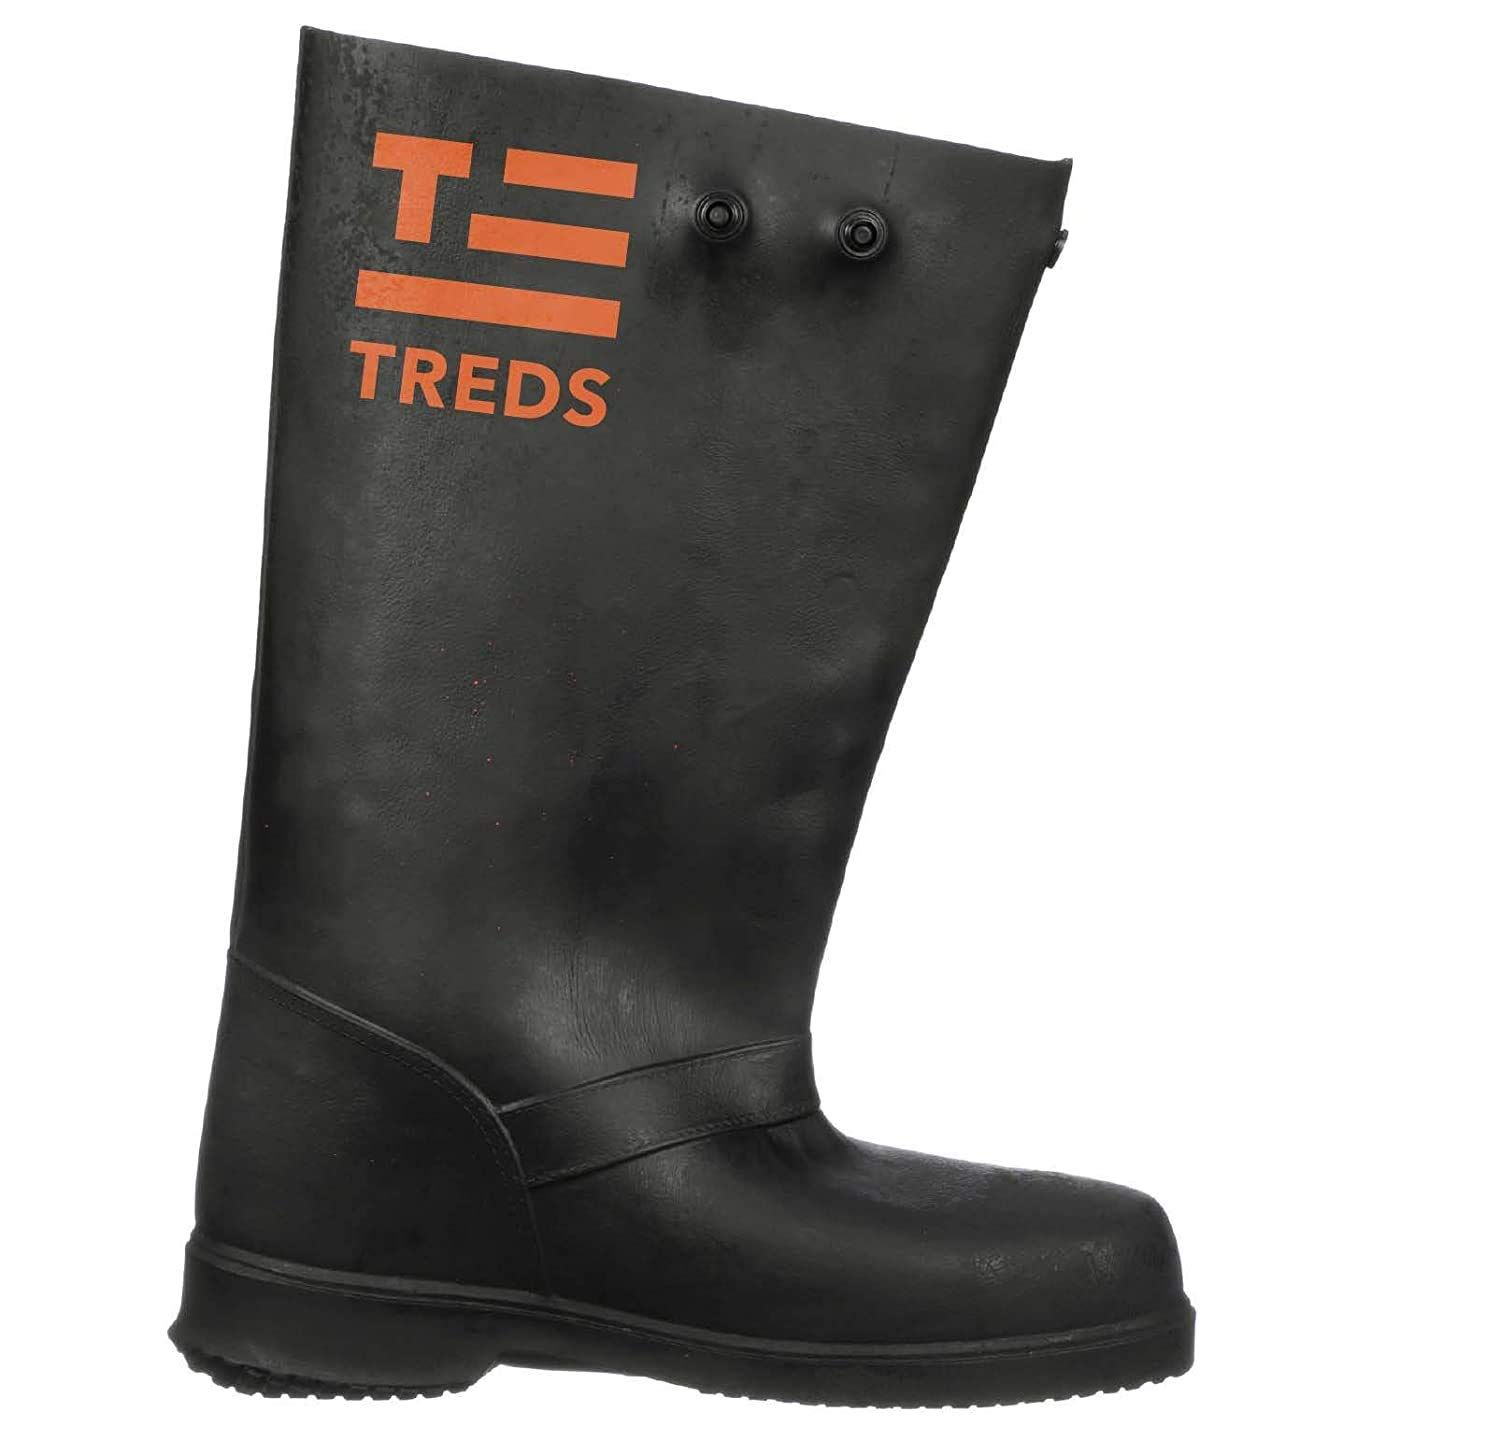 TREDS 17851 - 17&quot; Slush Boots, Medium